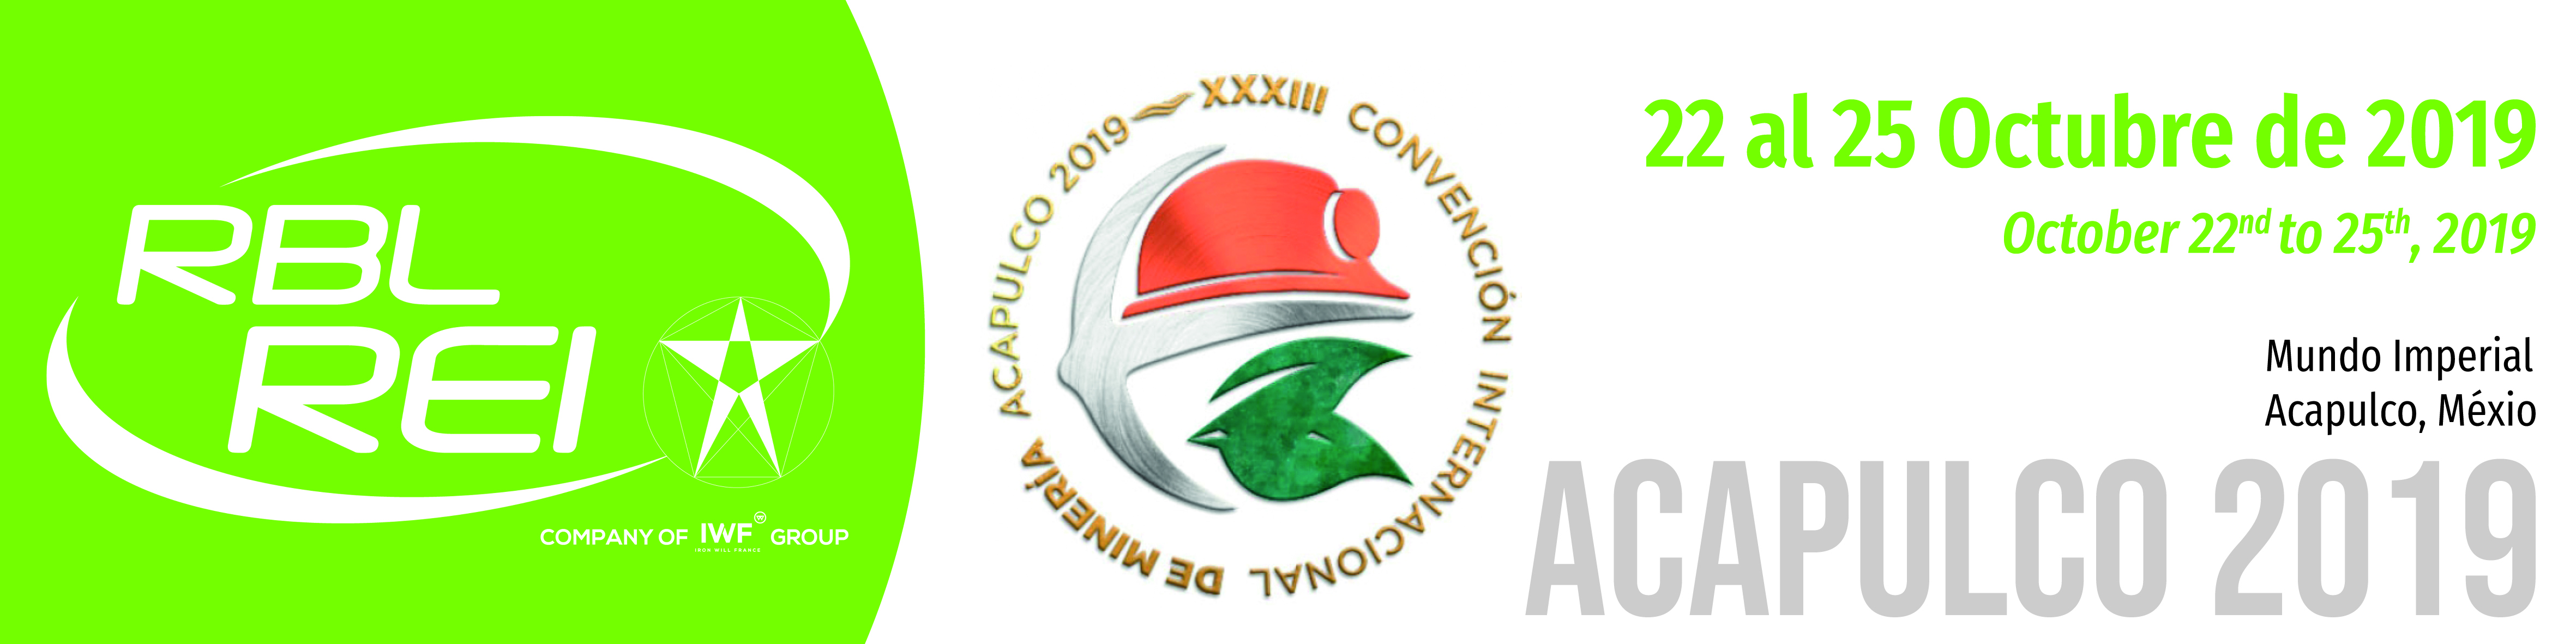 Mining Convention 2019 // 22 - 25 October 2019 // Acapulco - Mexico